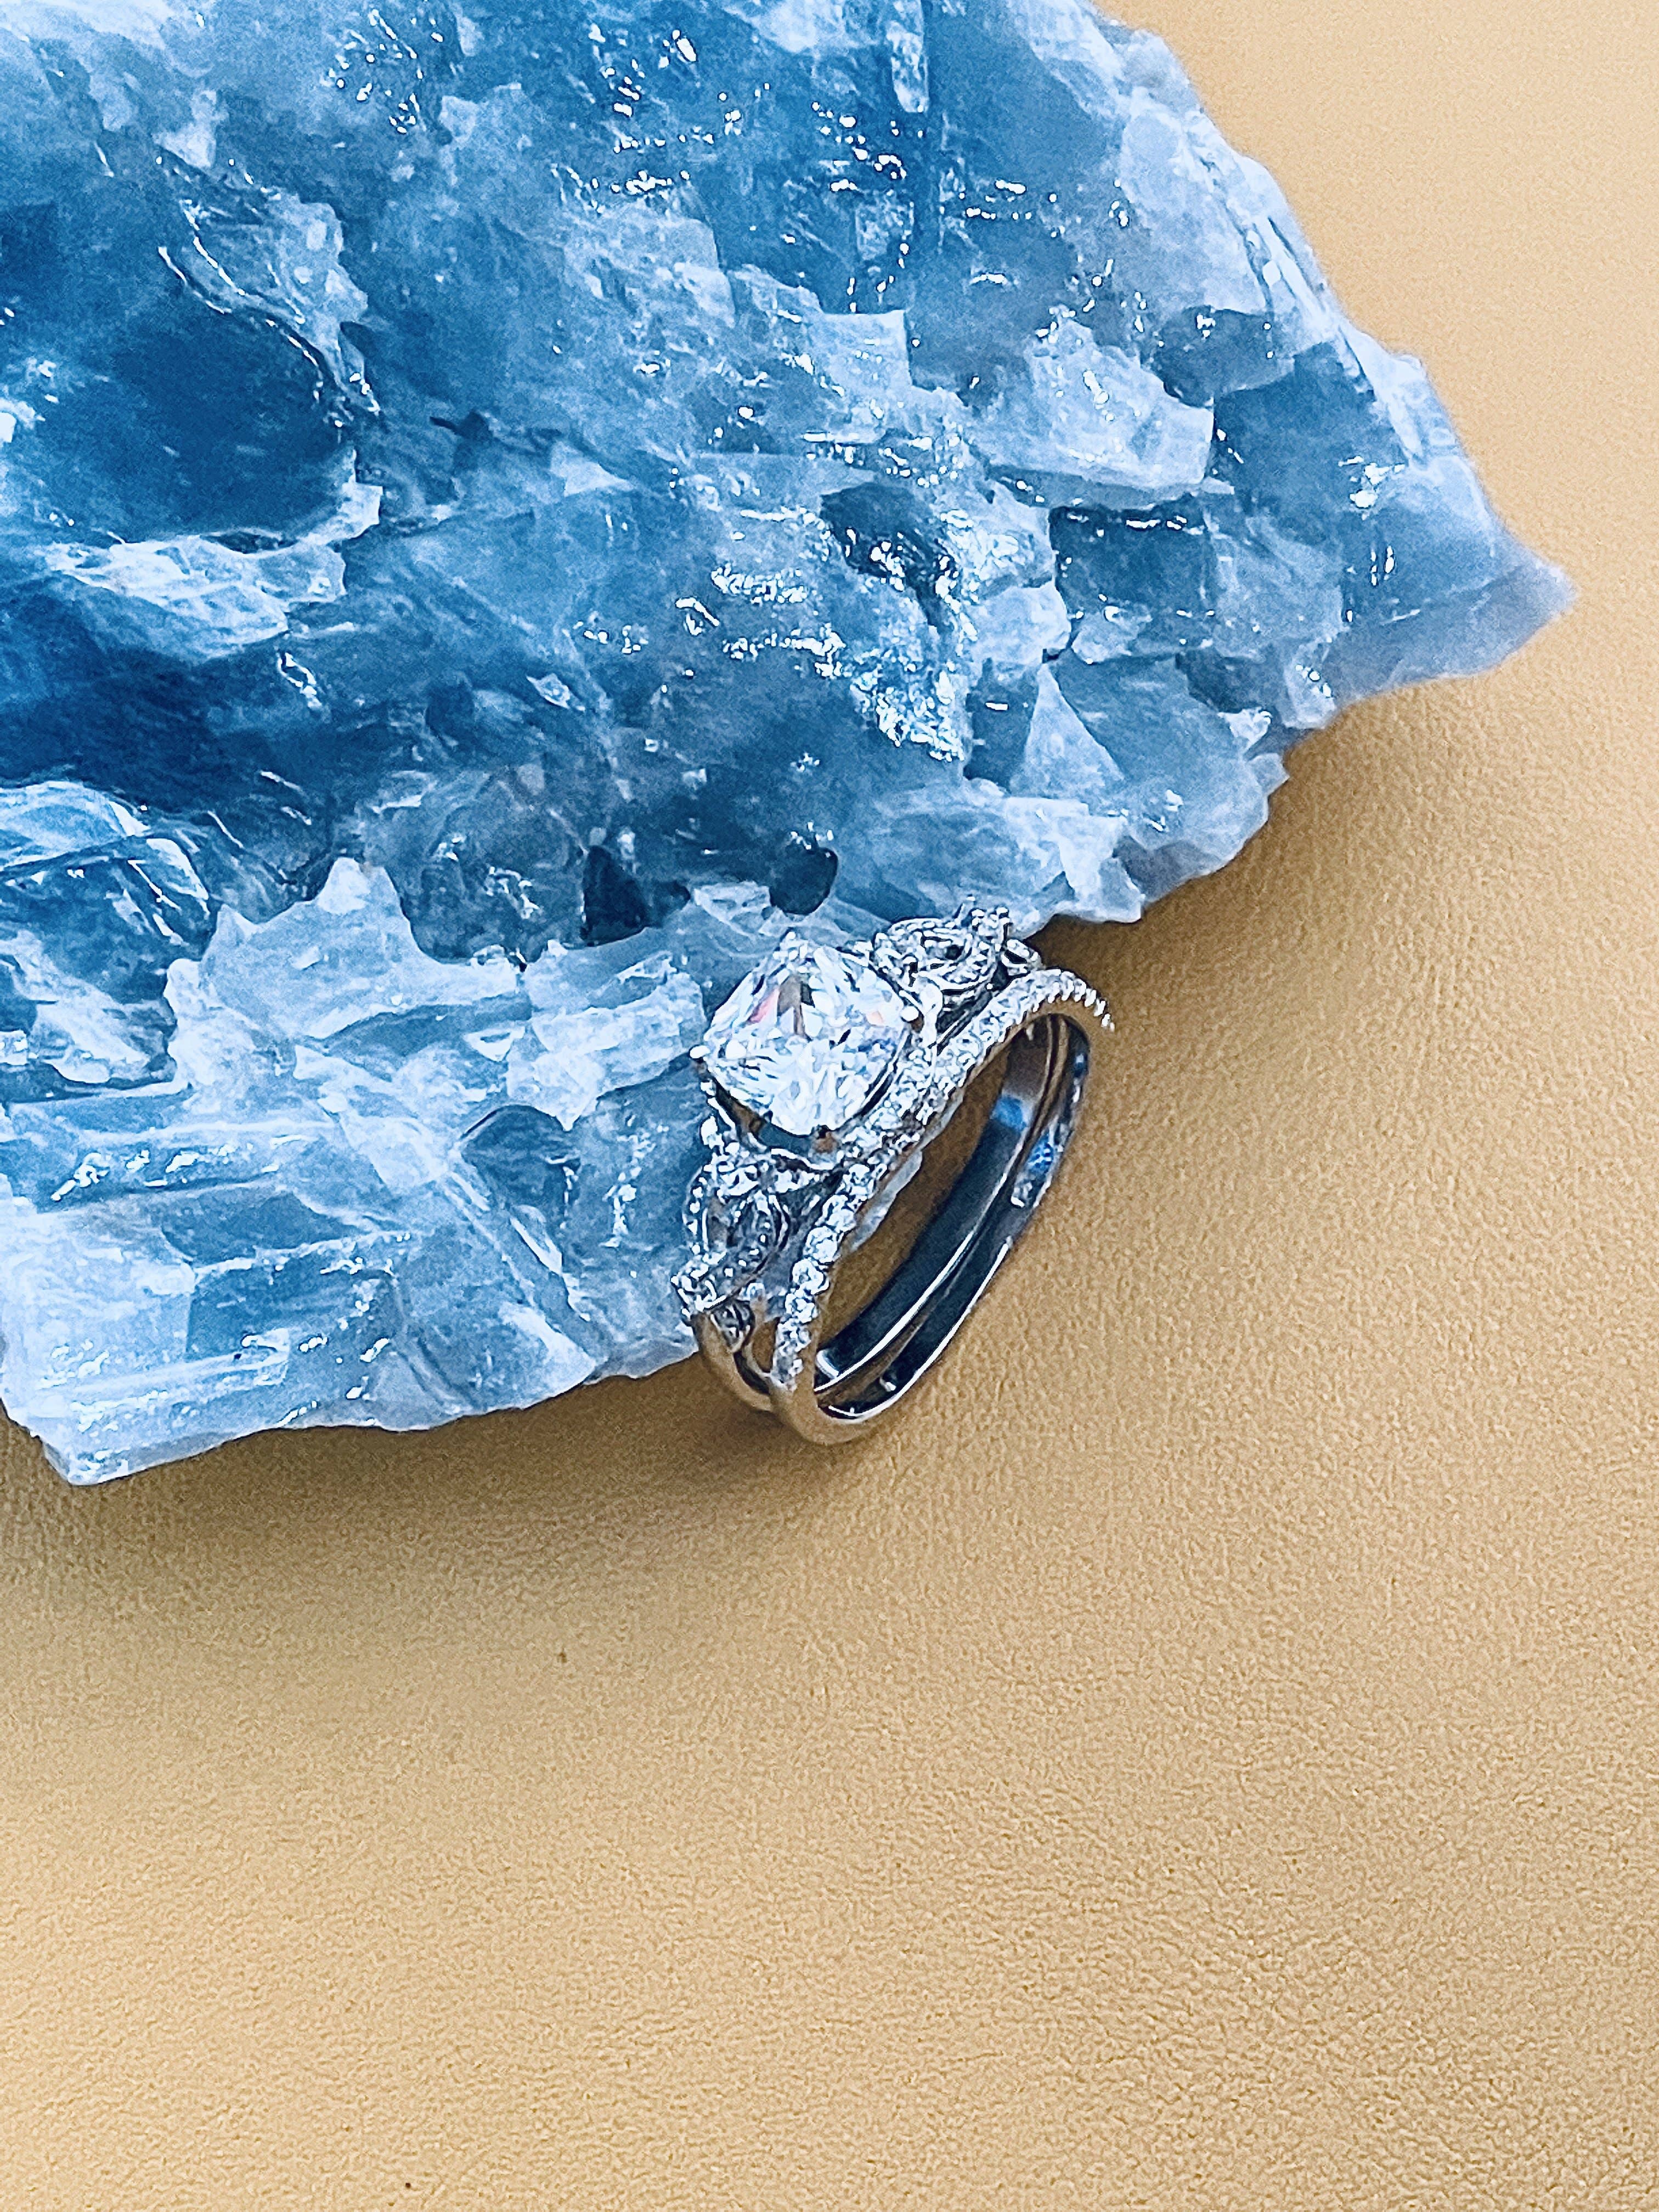 A01 anillo plata 925 con cristales de zirconia cúbico rojo tamaño ajustable